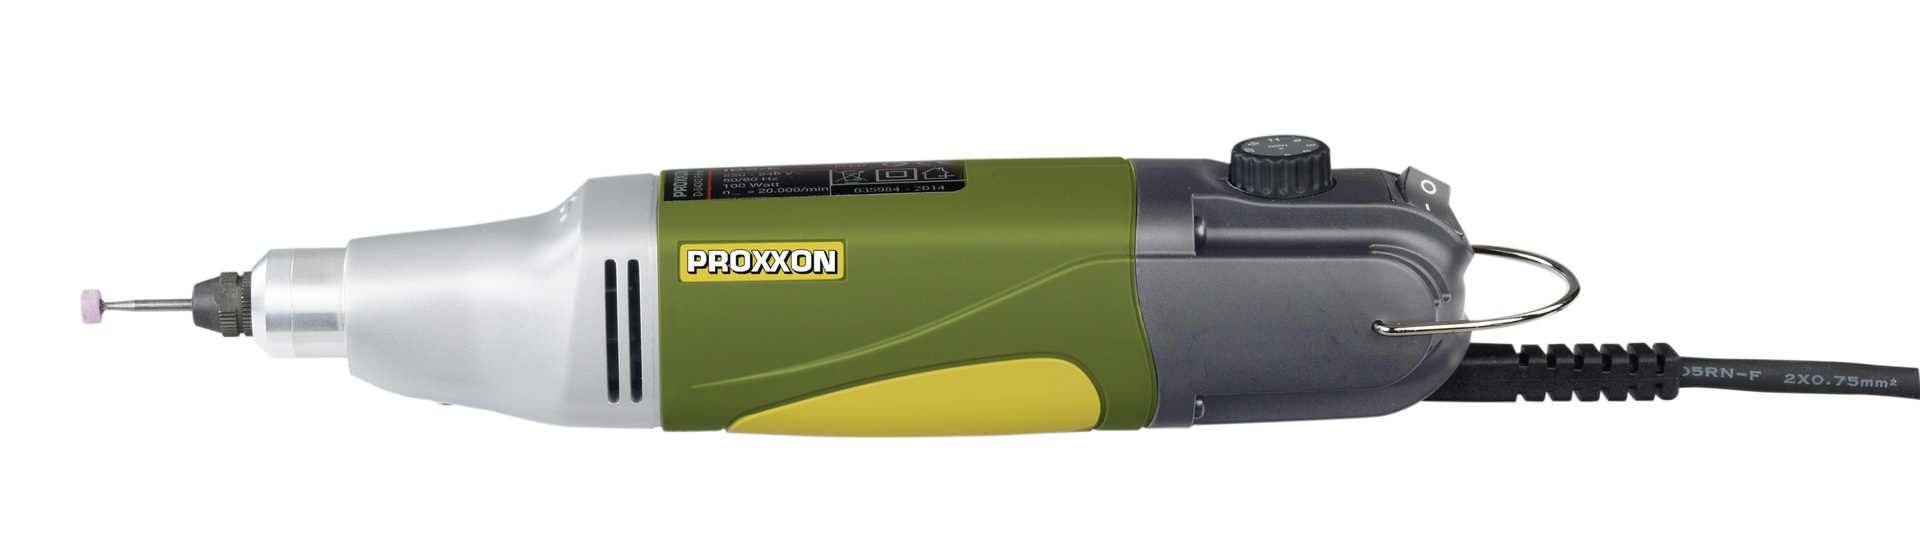 Proxxon Industrie-Bohrschleifer IB/E